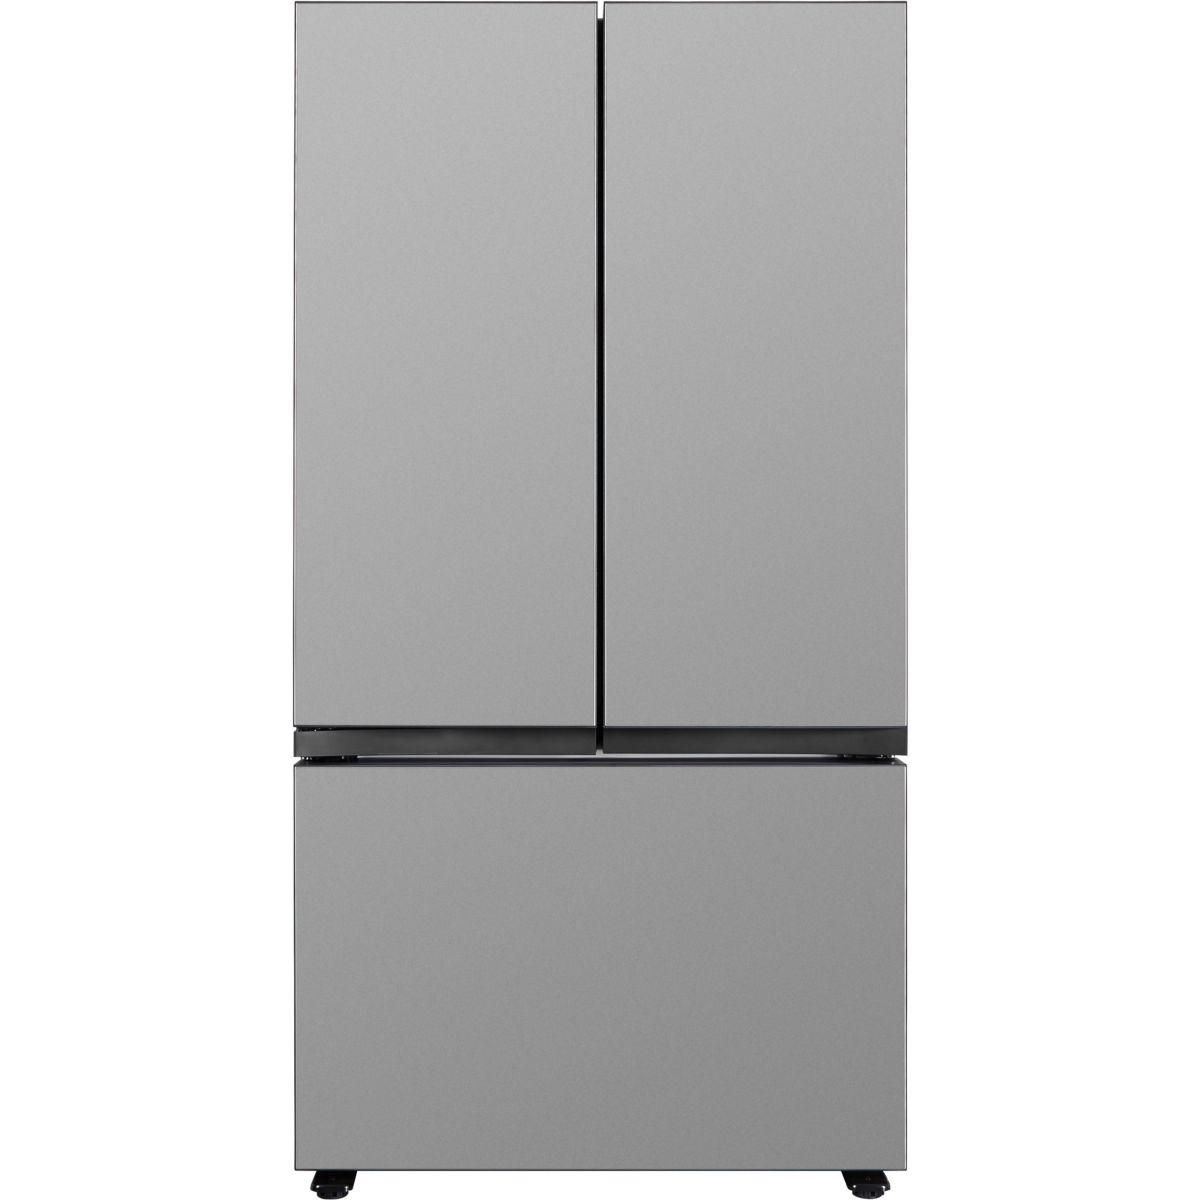 Samsung Réfrigérateur multi portes RF24BB660EQL